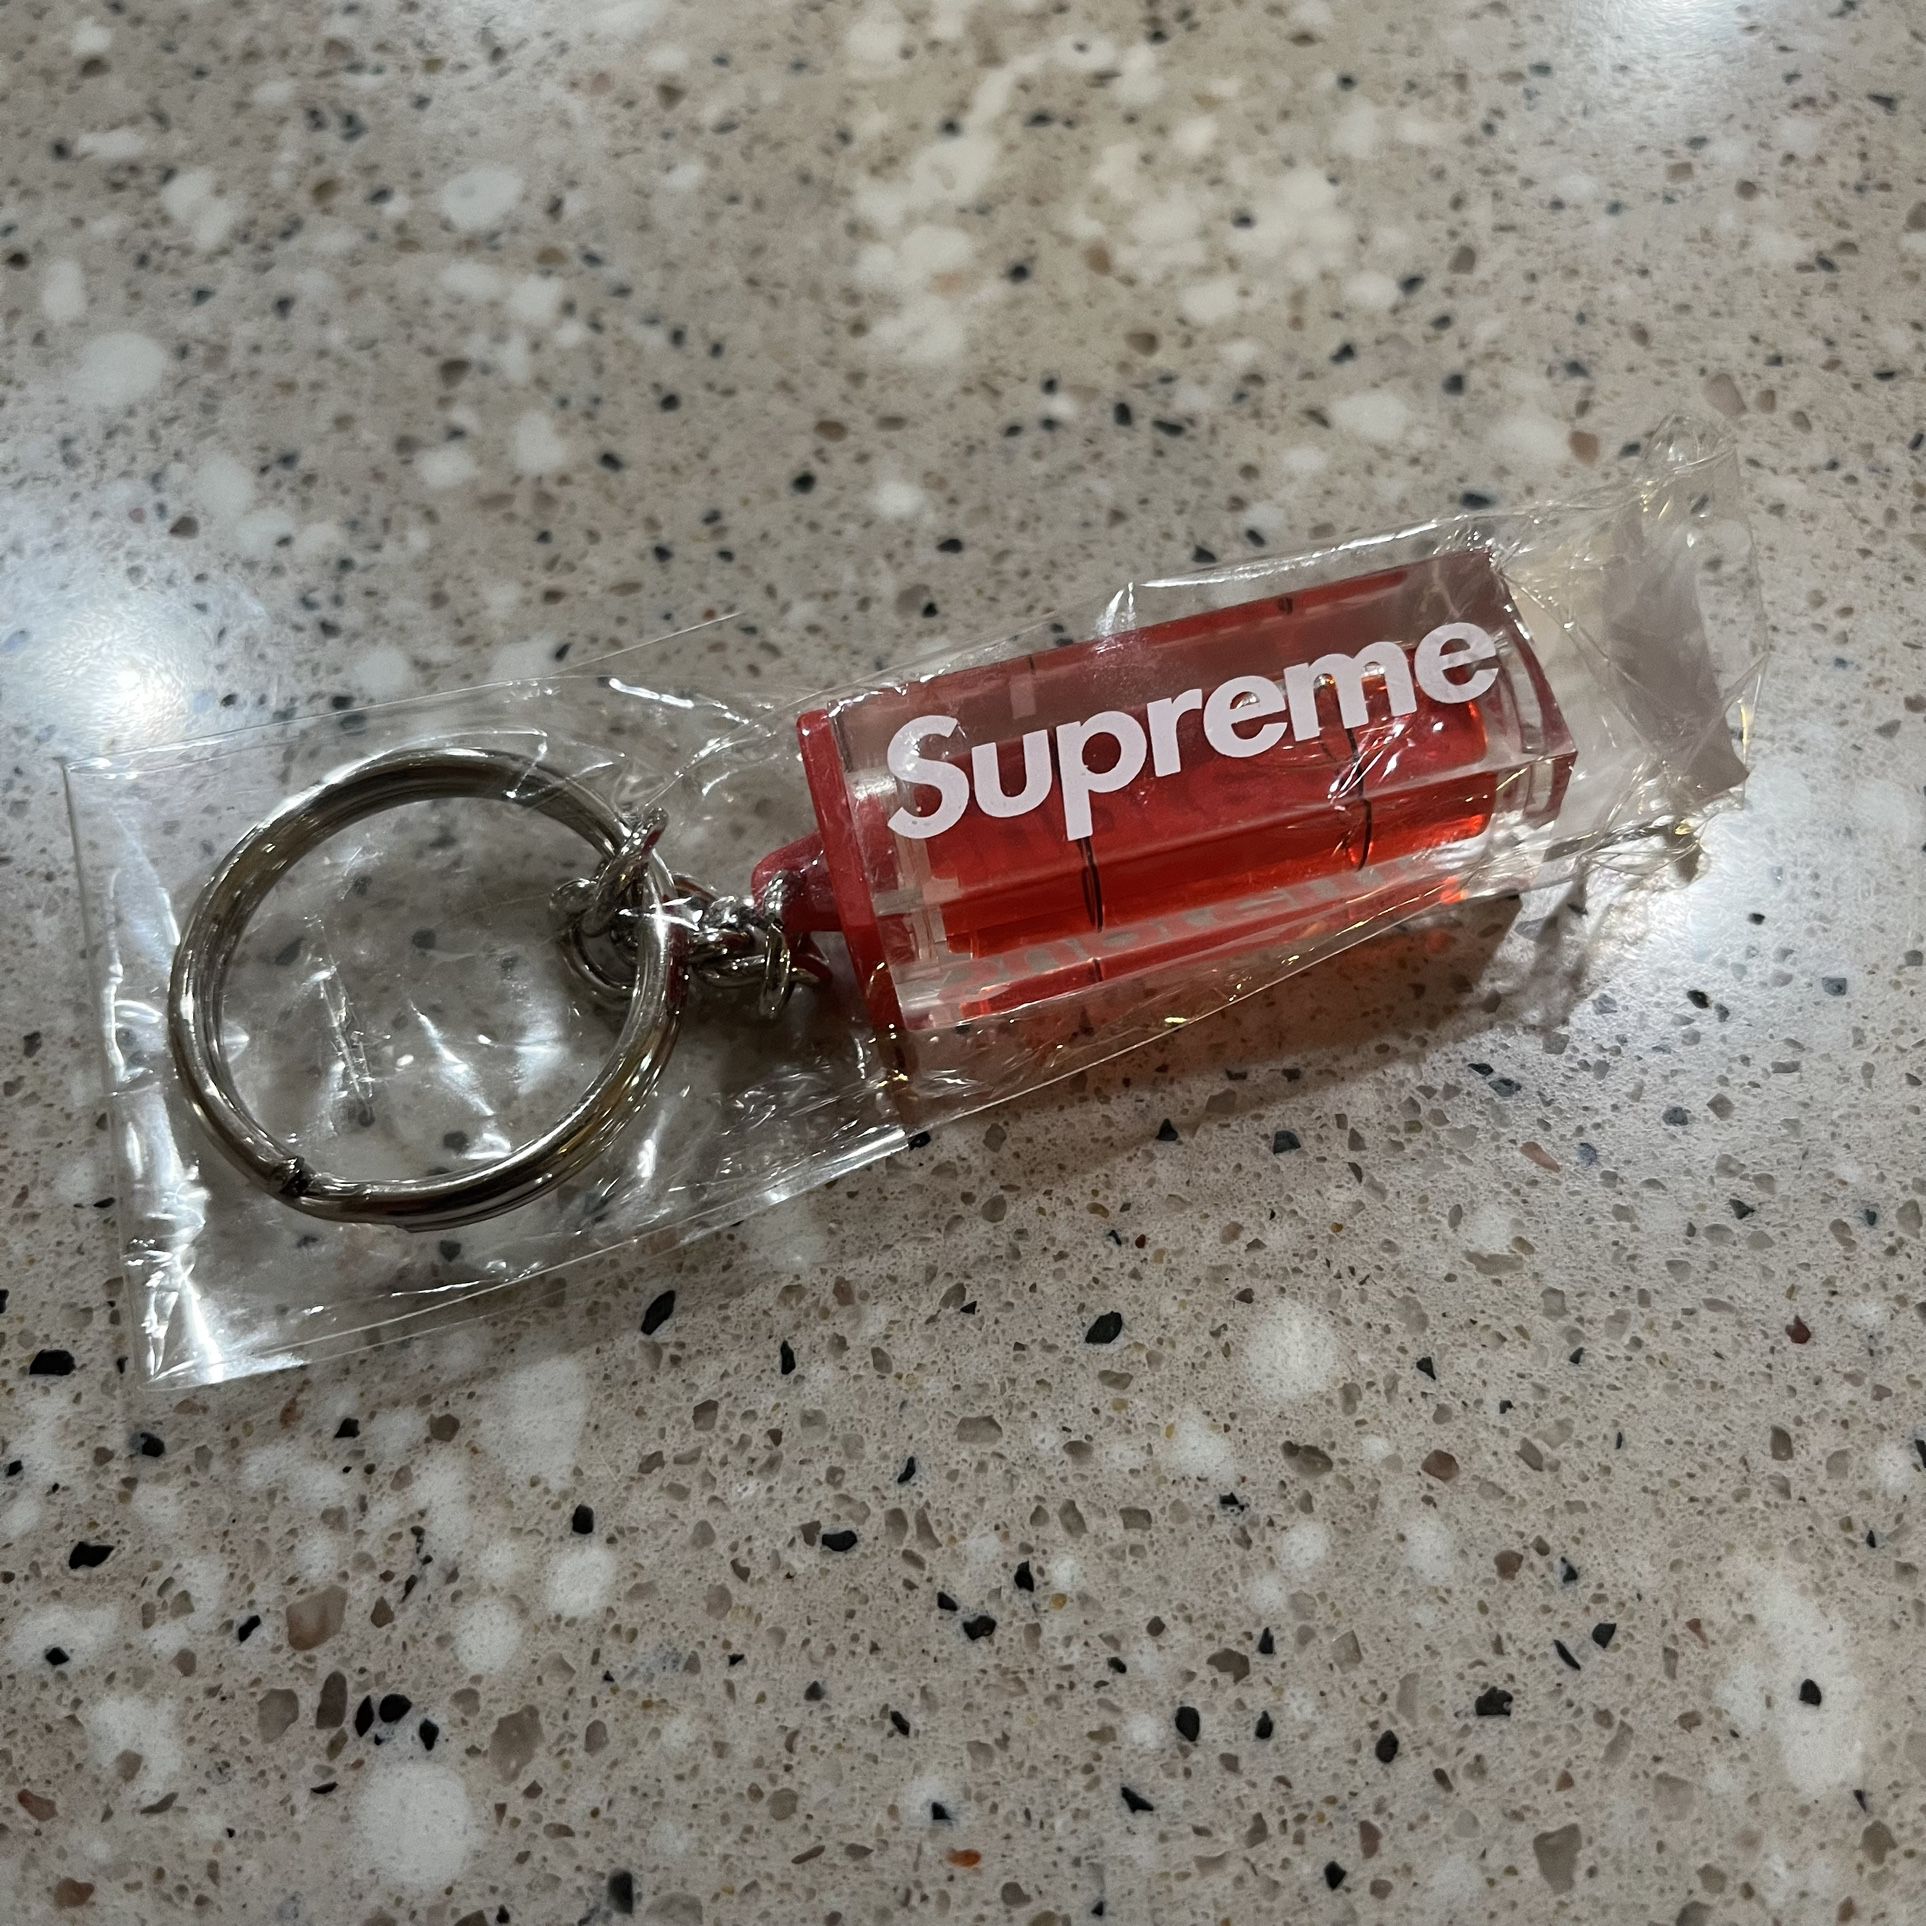 Key chain : r/Supreme